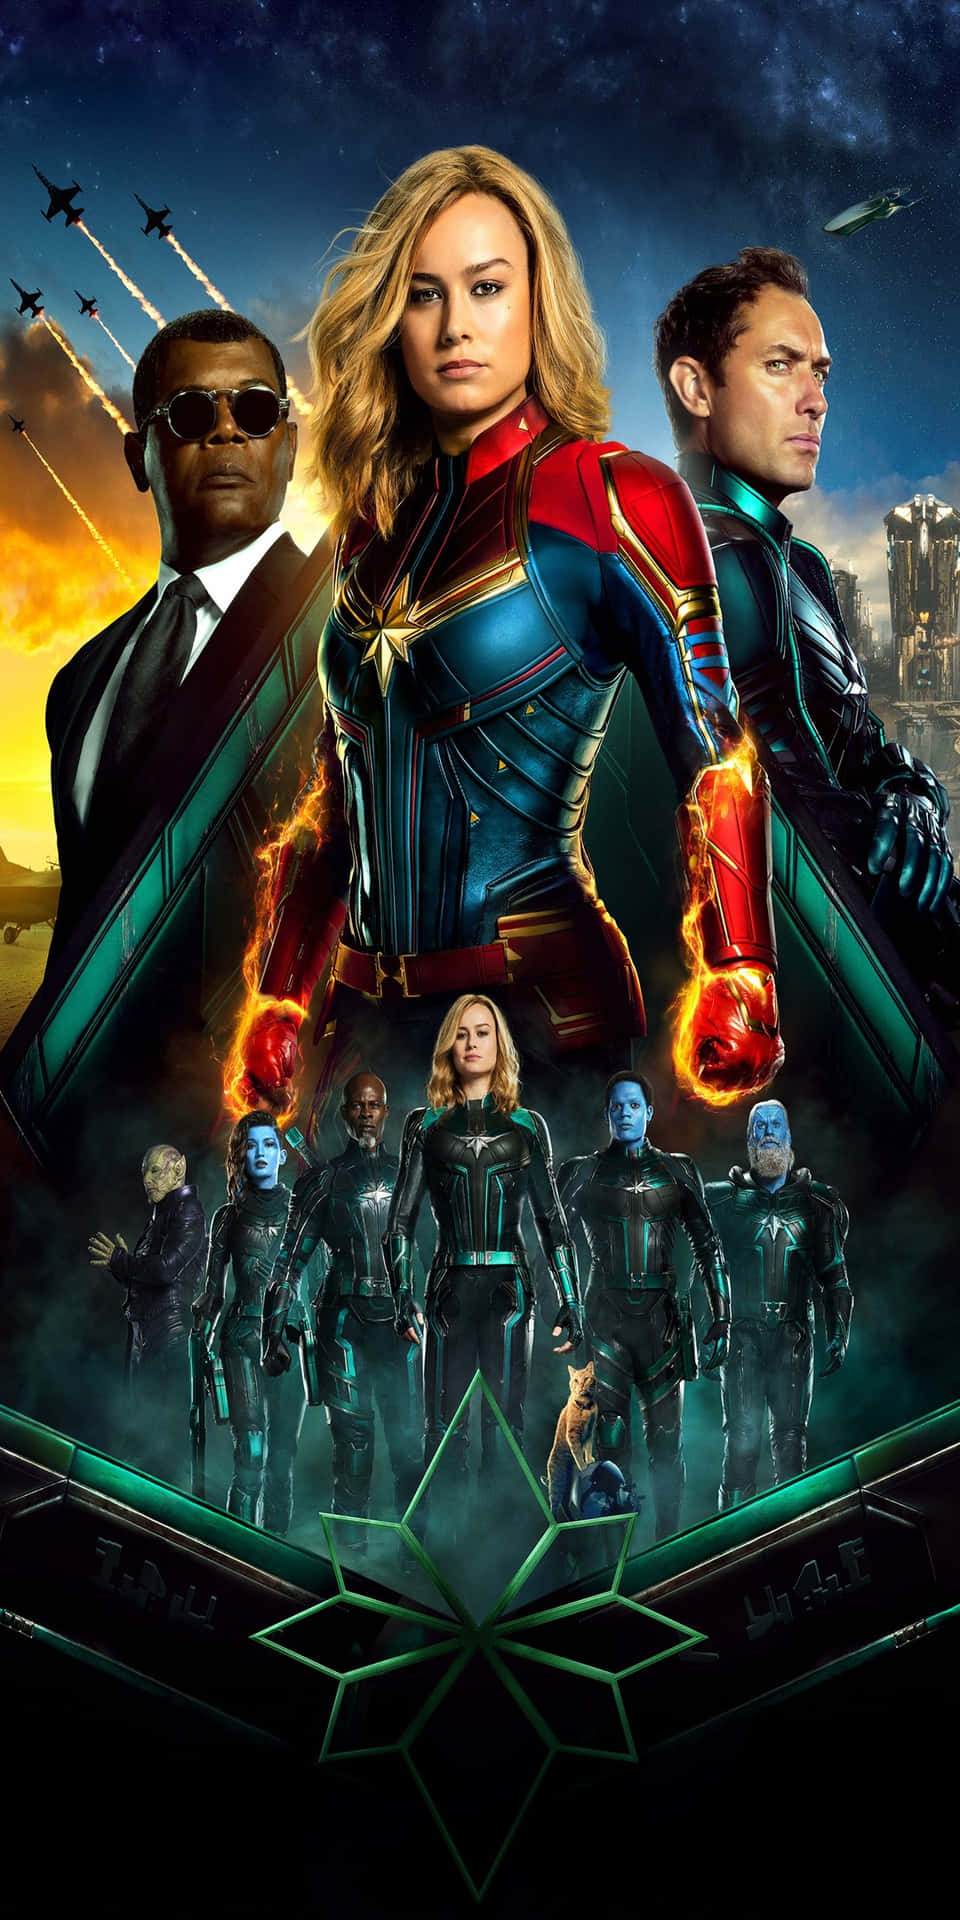 Pixel 3 Captain Marvel Movie Background